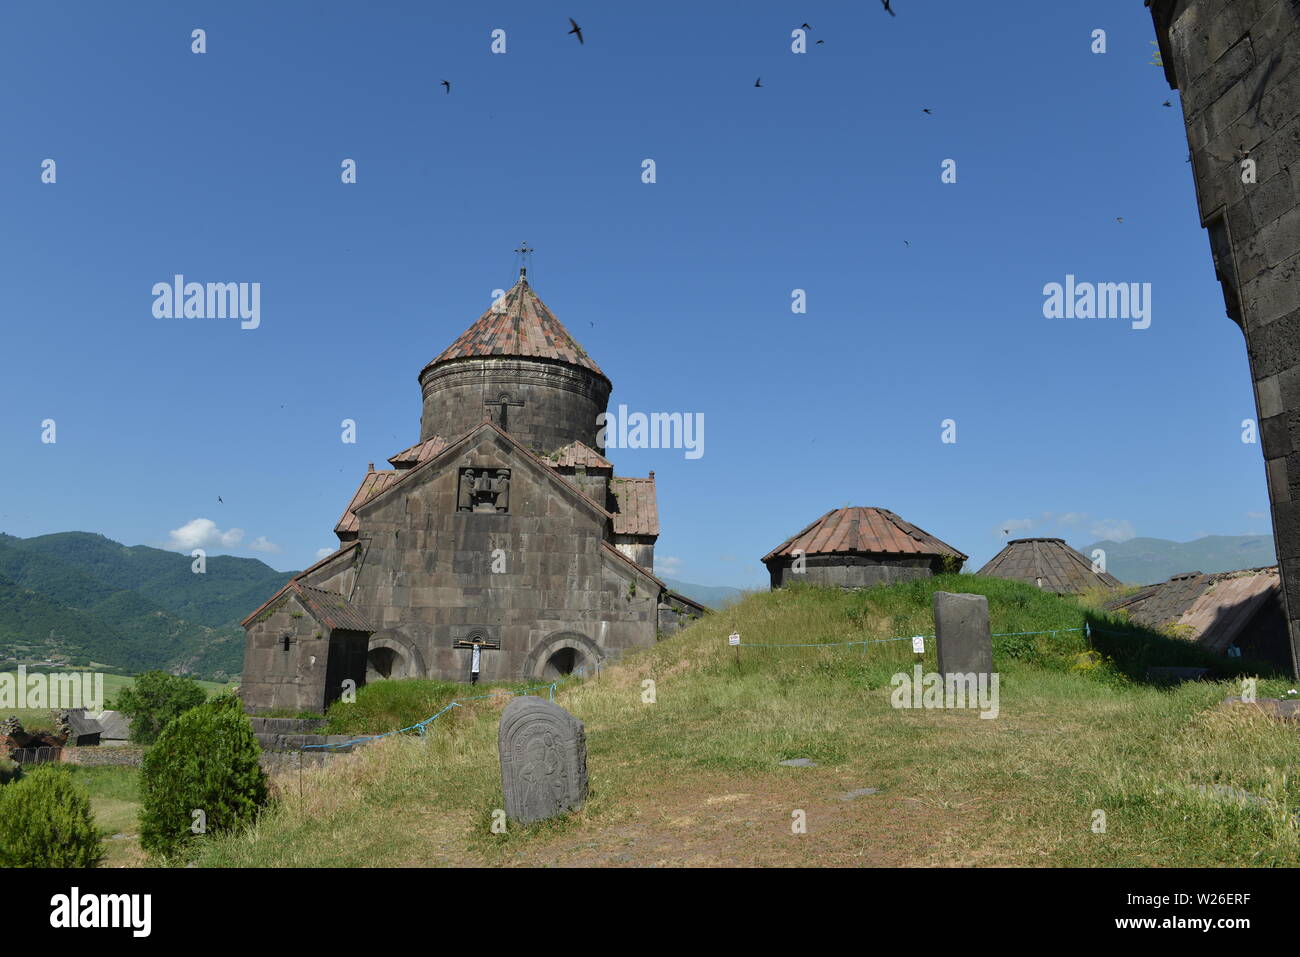 Armenien Touristische Tourismus reisen Highlights Stockfoto